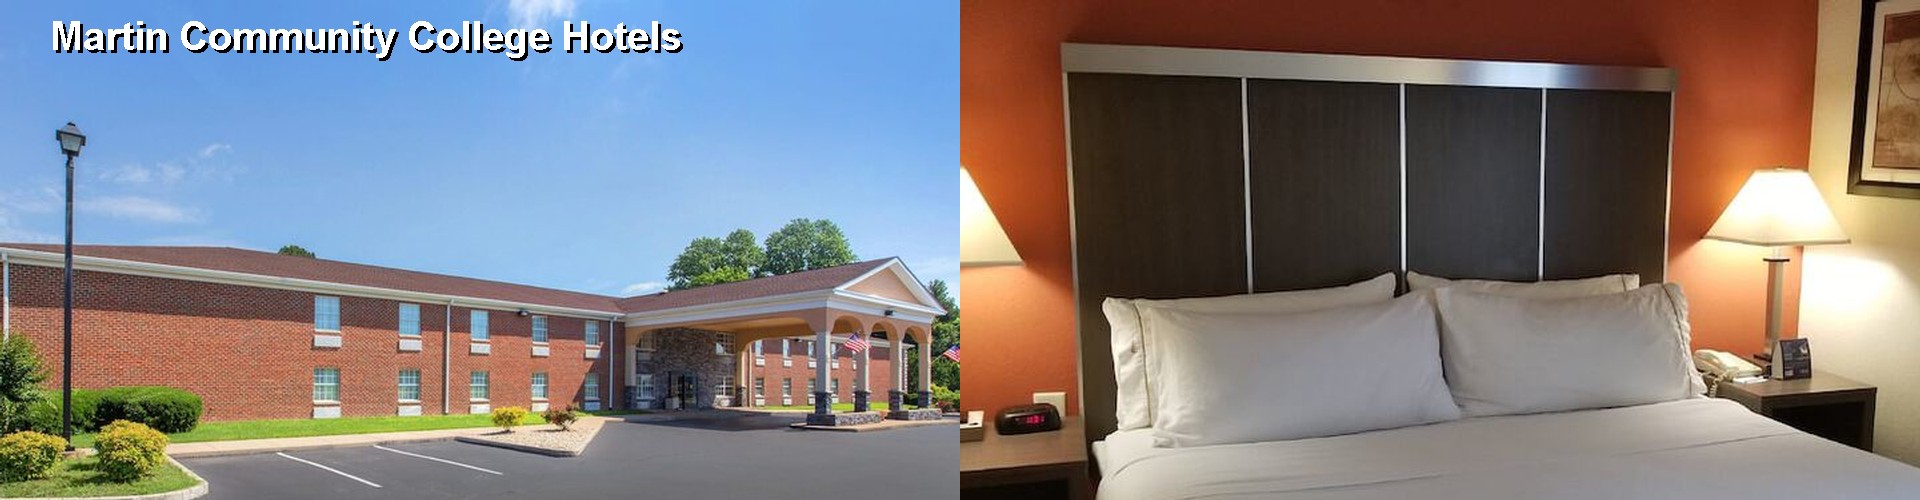 2 Best Hotels near Martin Community College